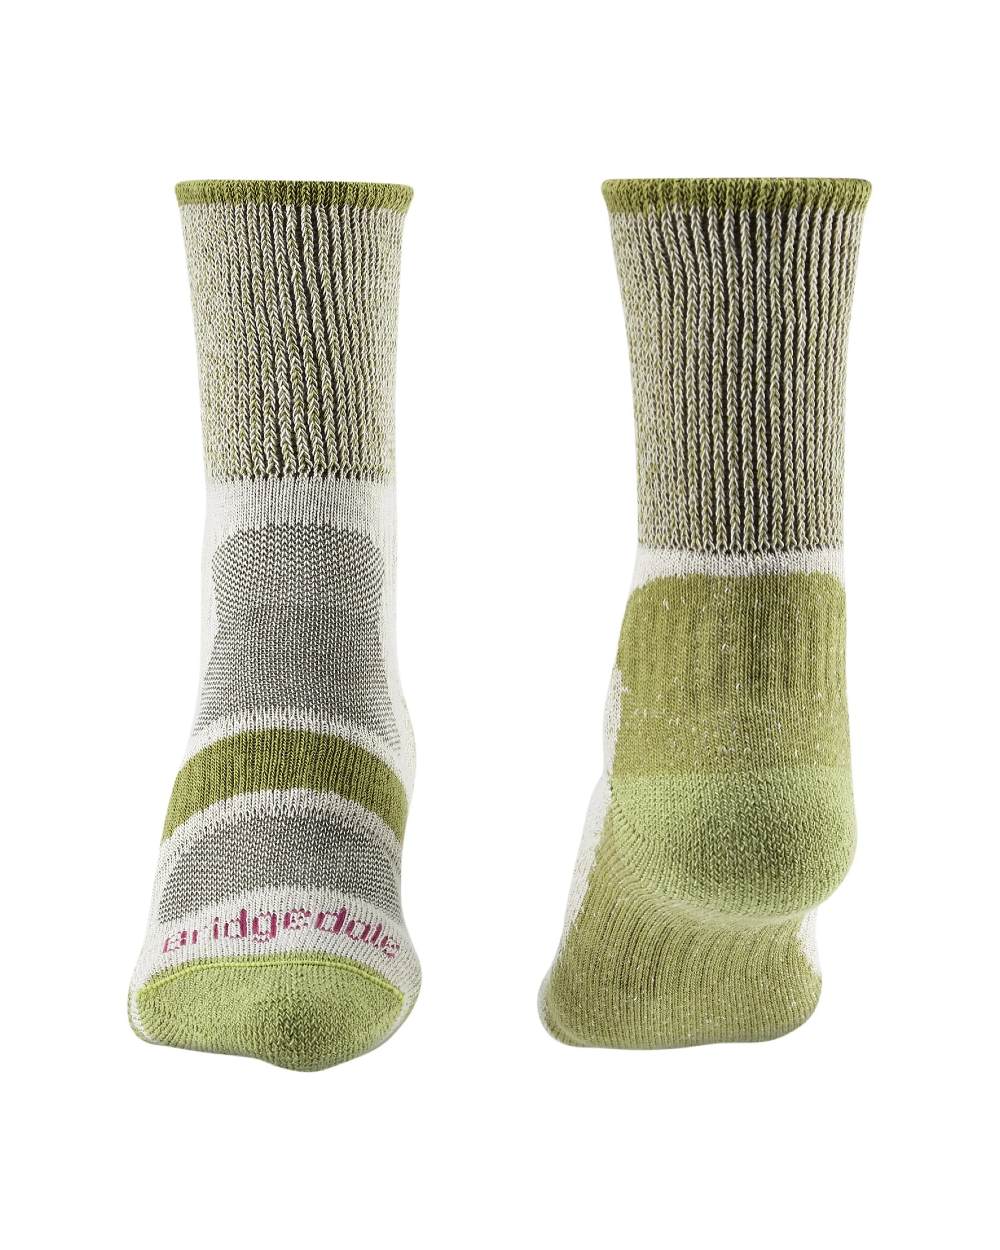 Spring Green coloured Bridgedale Womens Lightweight Coolmax Comfort Socks on white background 